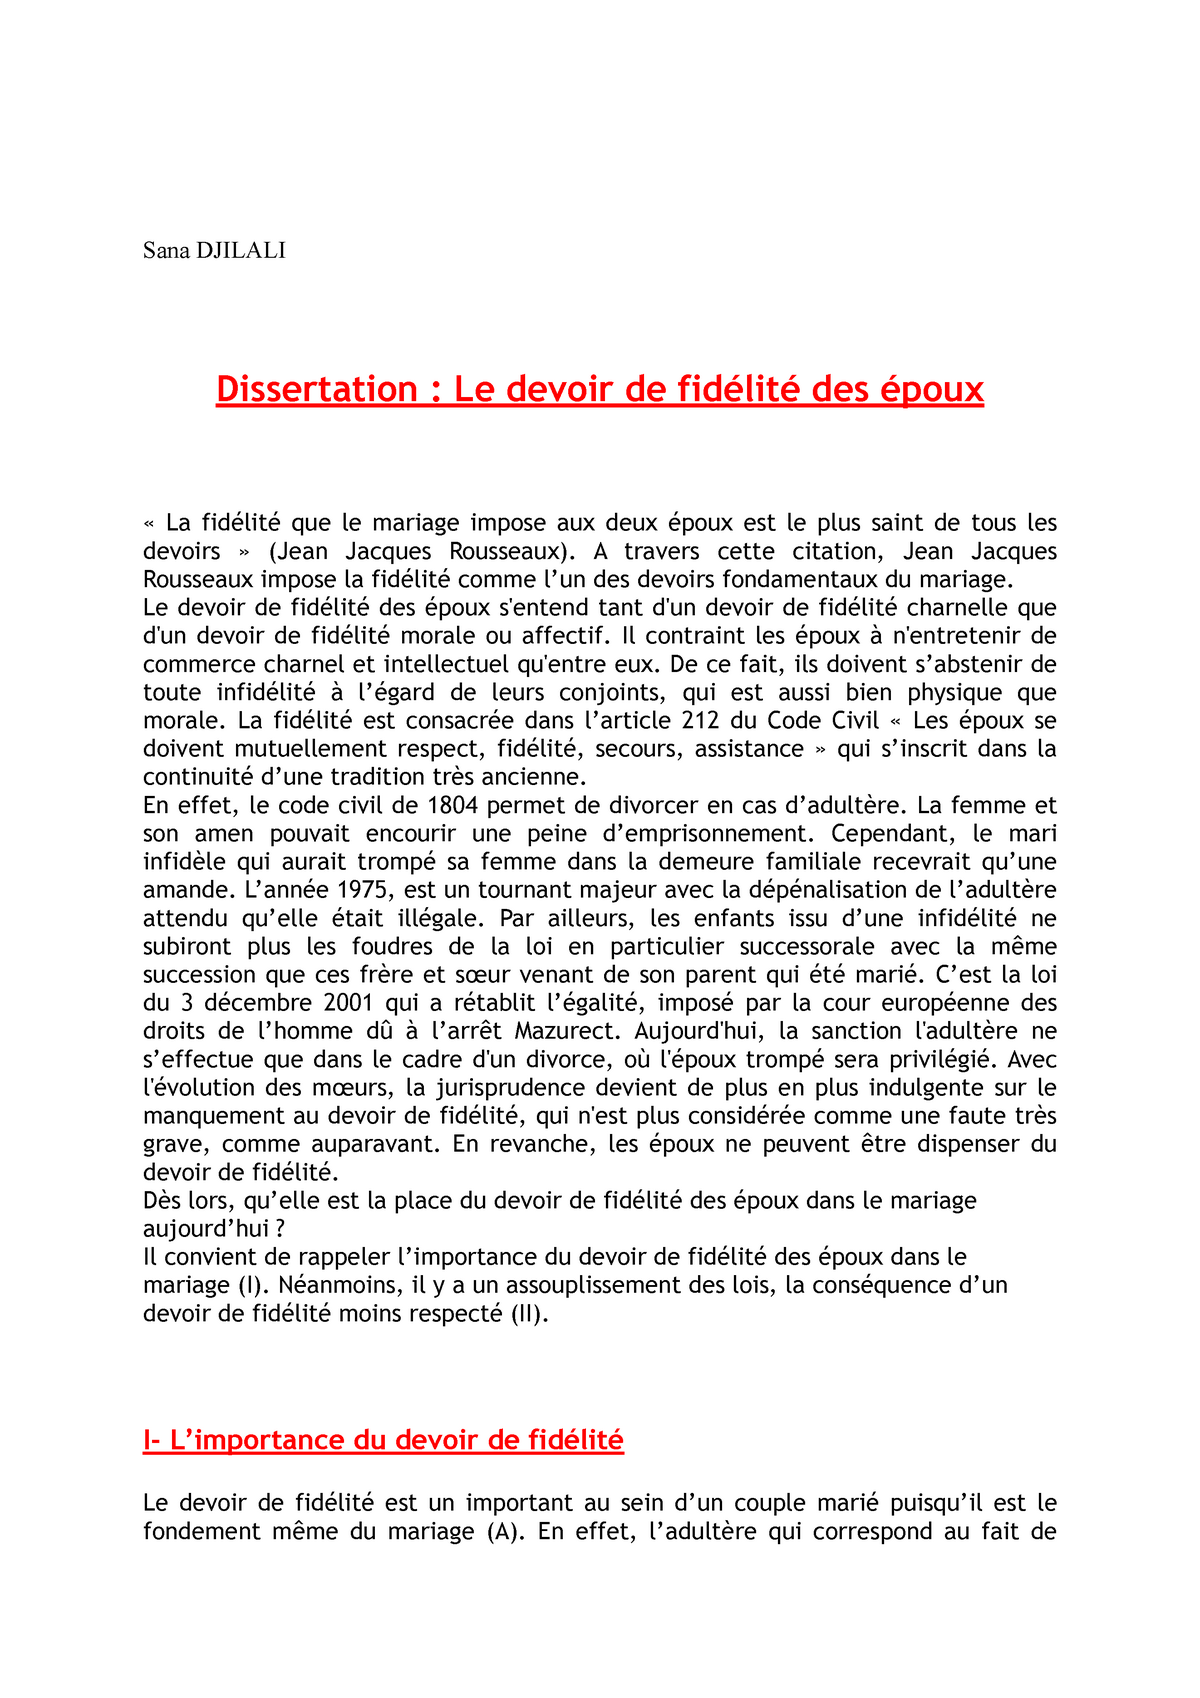 Td Seance 3 Droit Civil Td Avec Dissertation Redige Sana Djilali Dissertation Le Devoir De Studocu